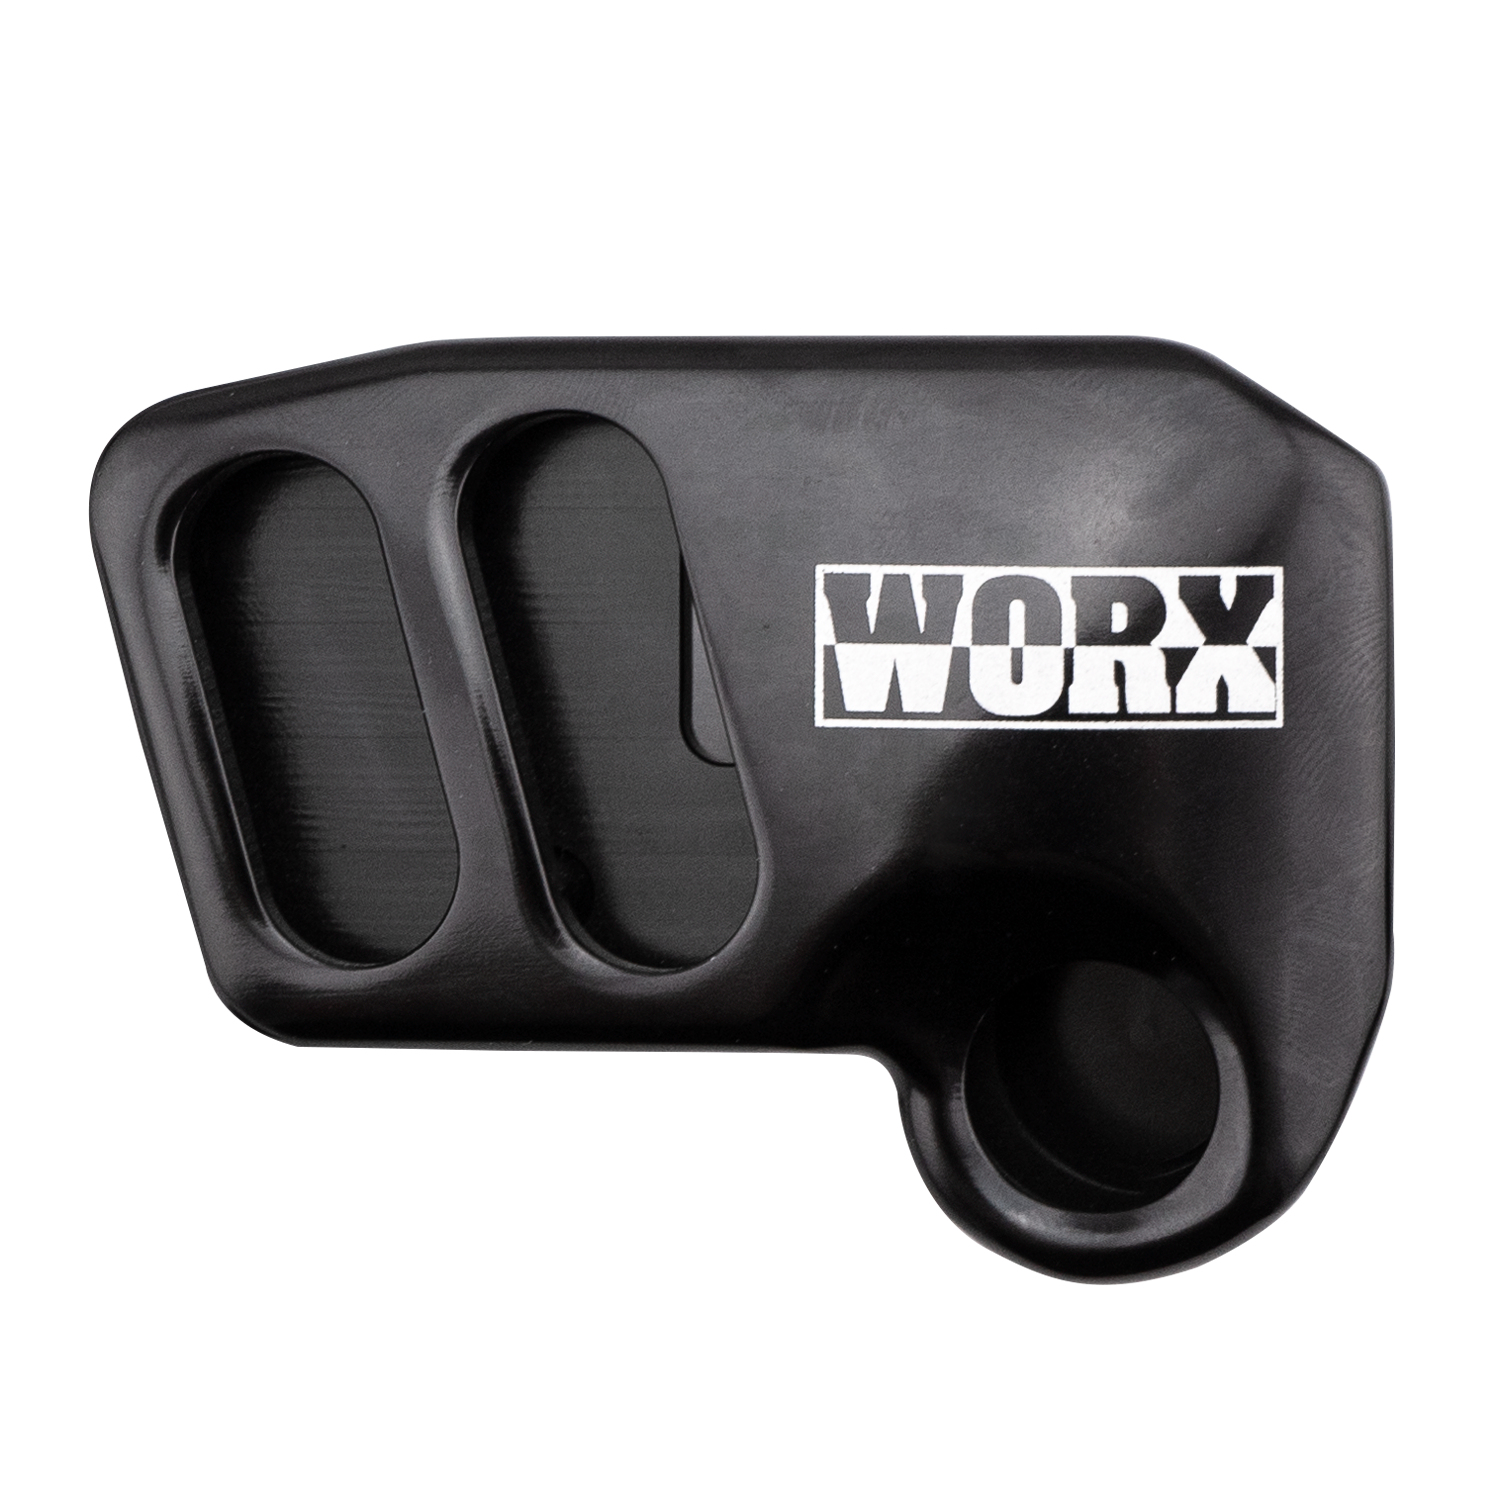 Worx Racing Sea-Doo Left Switch panel holder